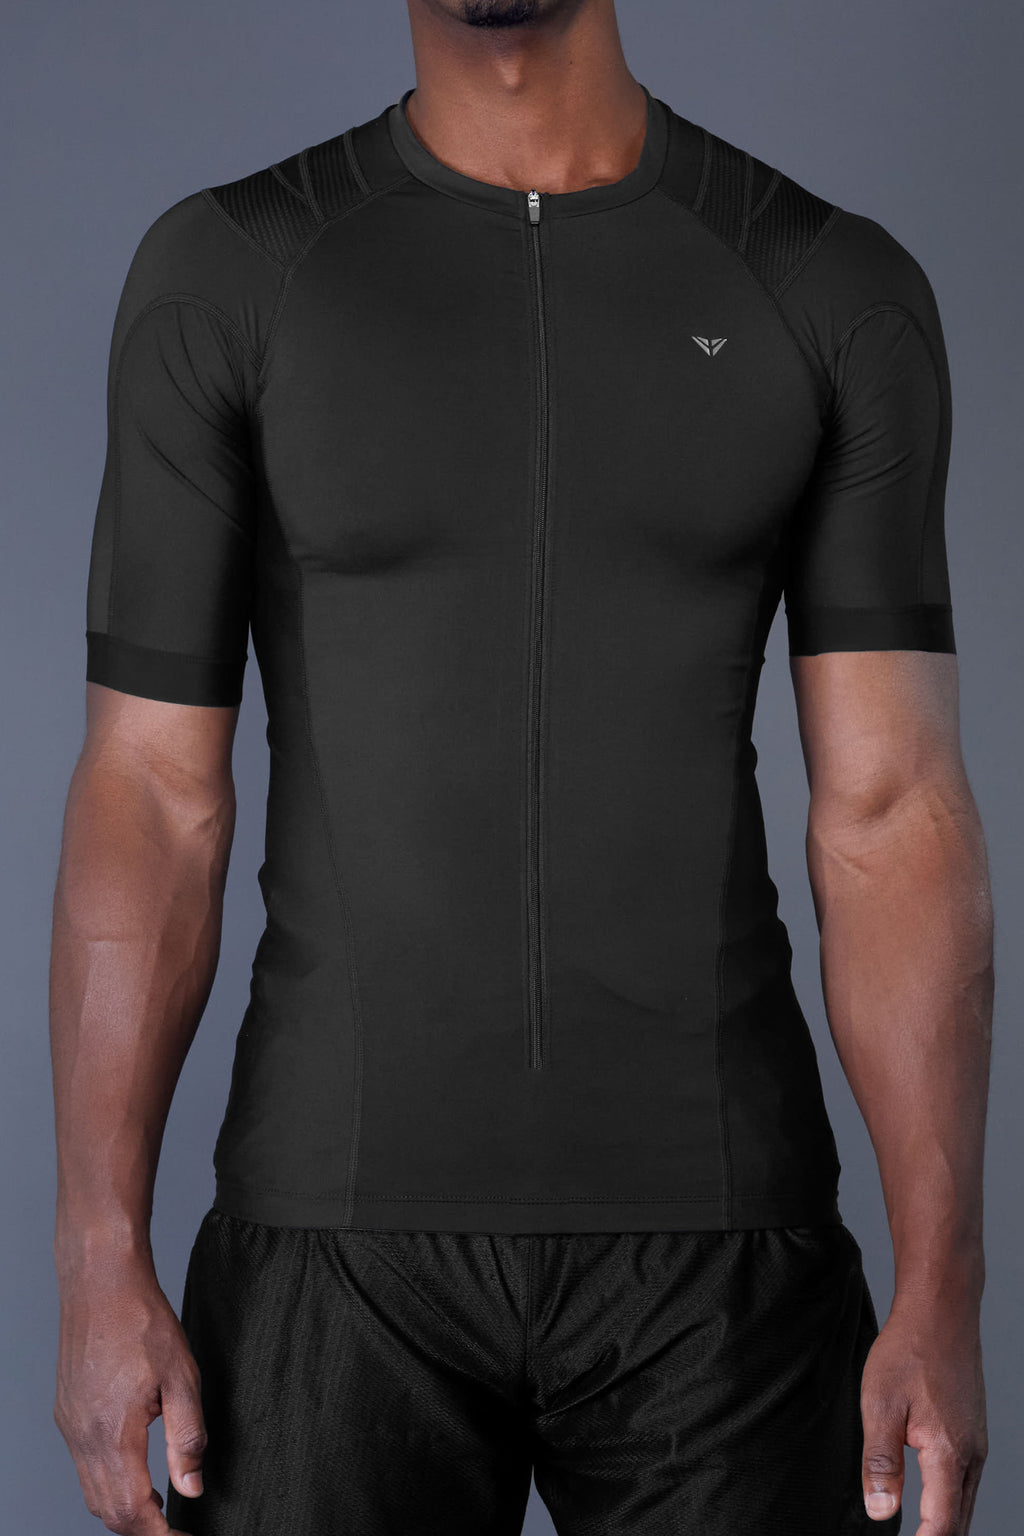 Men's Zipper Posture Shirt 2.0 // White (2XL) - AlignMed - Touch